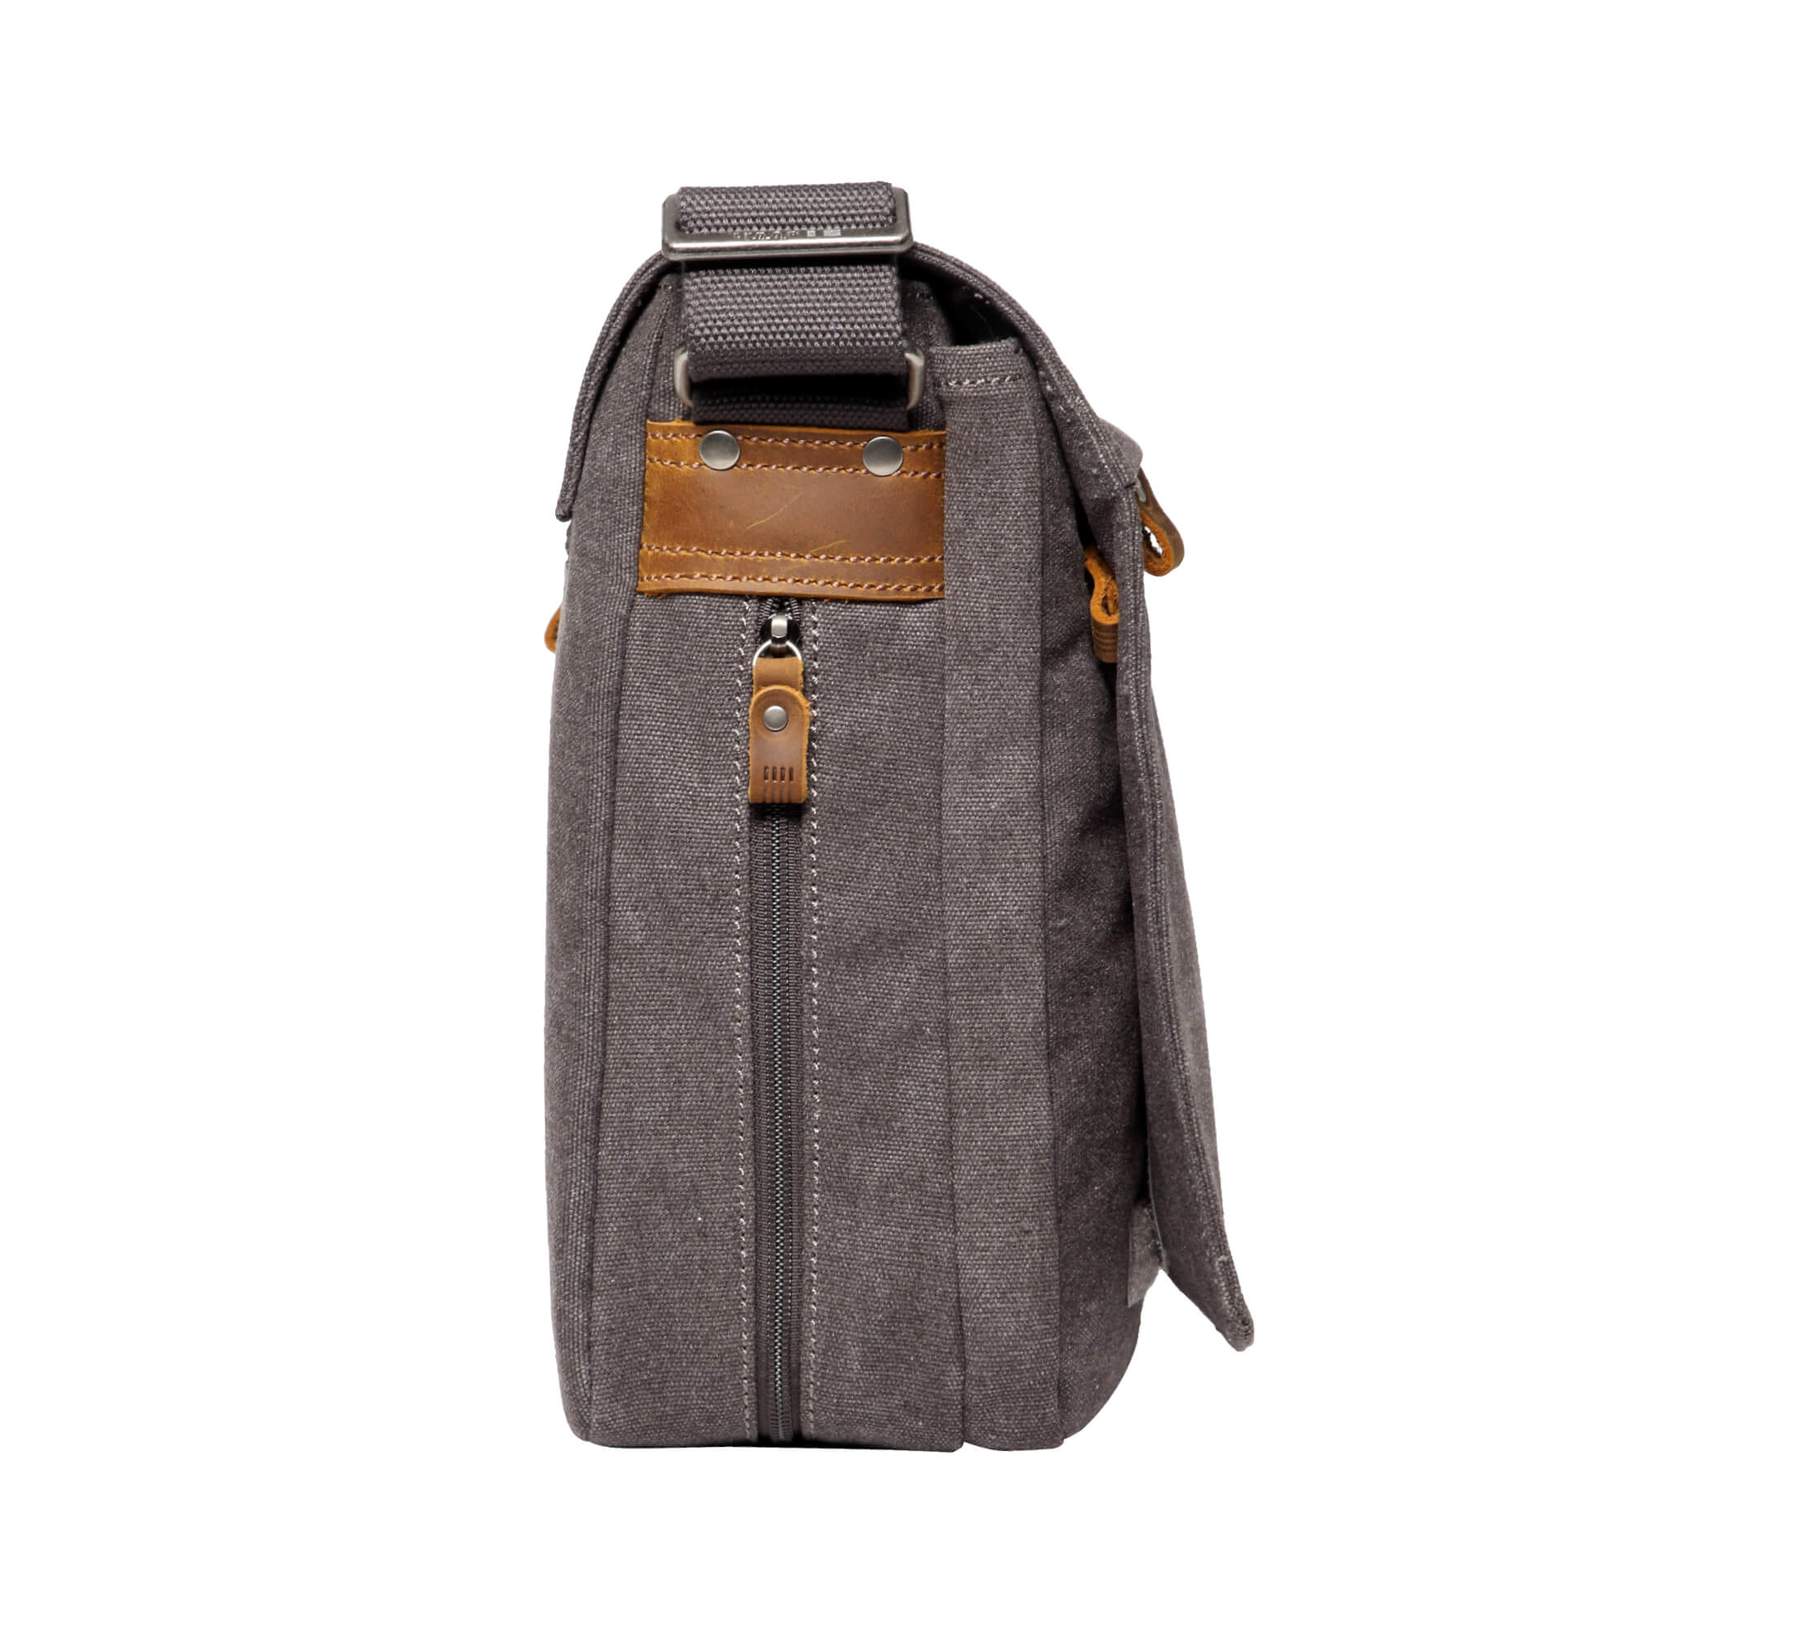 Medium Flap Front Messenger Bag - Charcoal | Troop London NZ